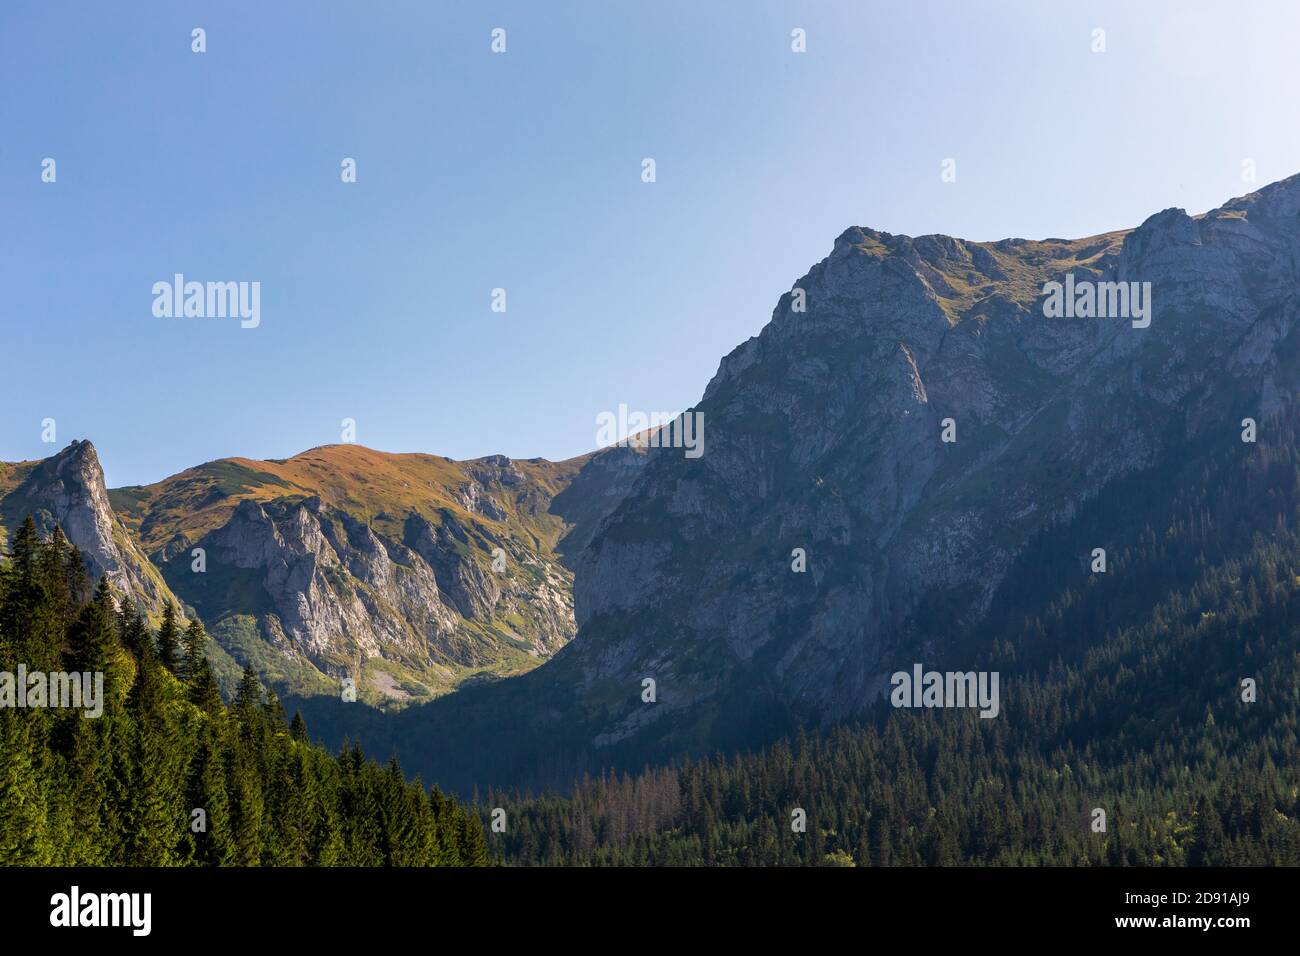 Tatra Mountains landscape with Giewont, Siodlowa Turnia, Mnichowe Turnie and Wielka Turnia peaks, seen from Wielka Polana Malolacka Glade in autumn, Stock Photo